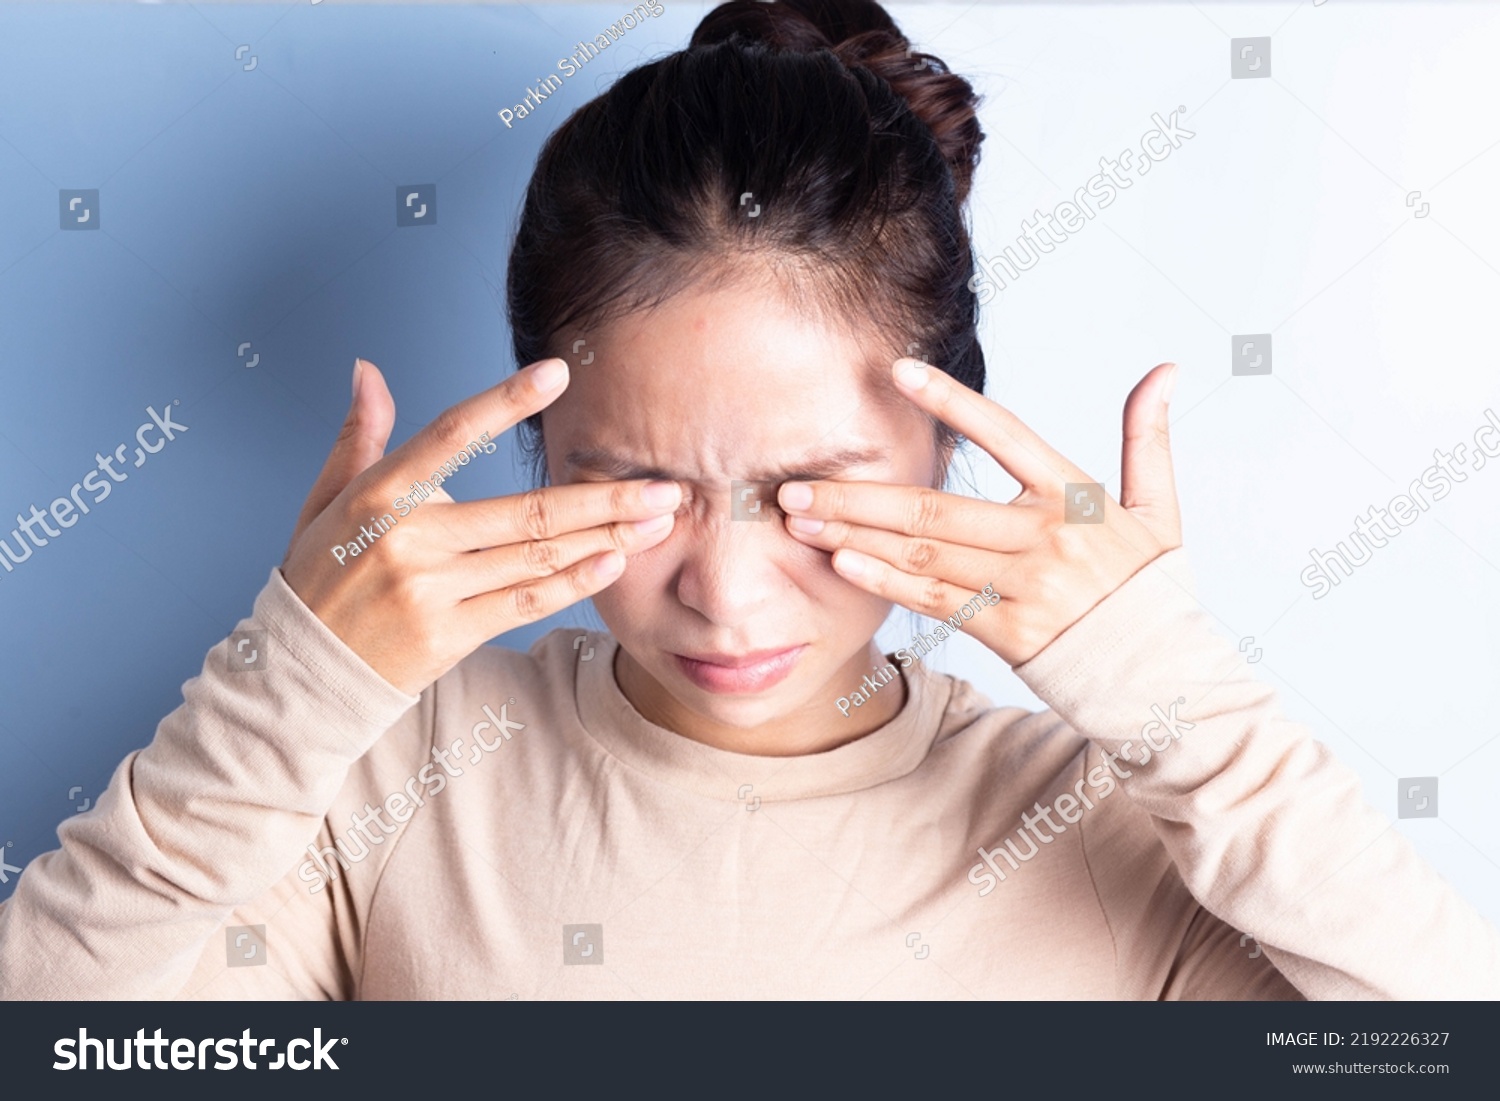 Close-up of young woman rubbing irritated eyes, eye irritation, eye rubbing, eye problems, migraine pain #2192226327